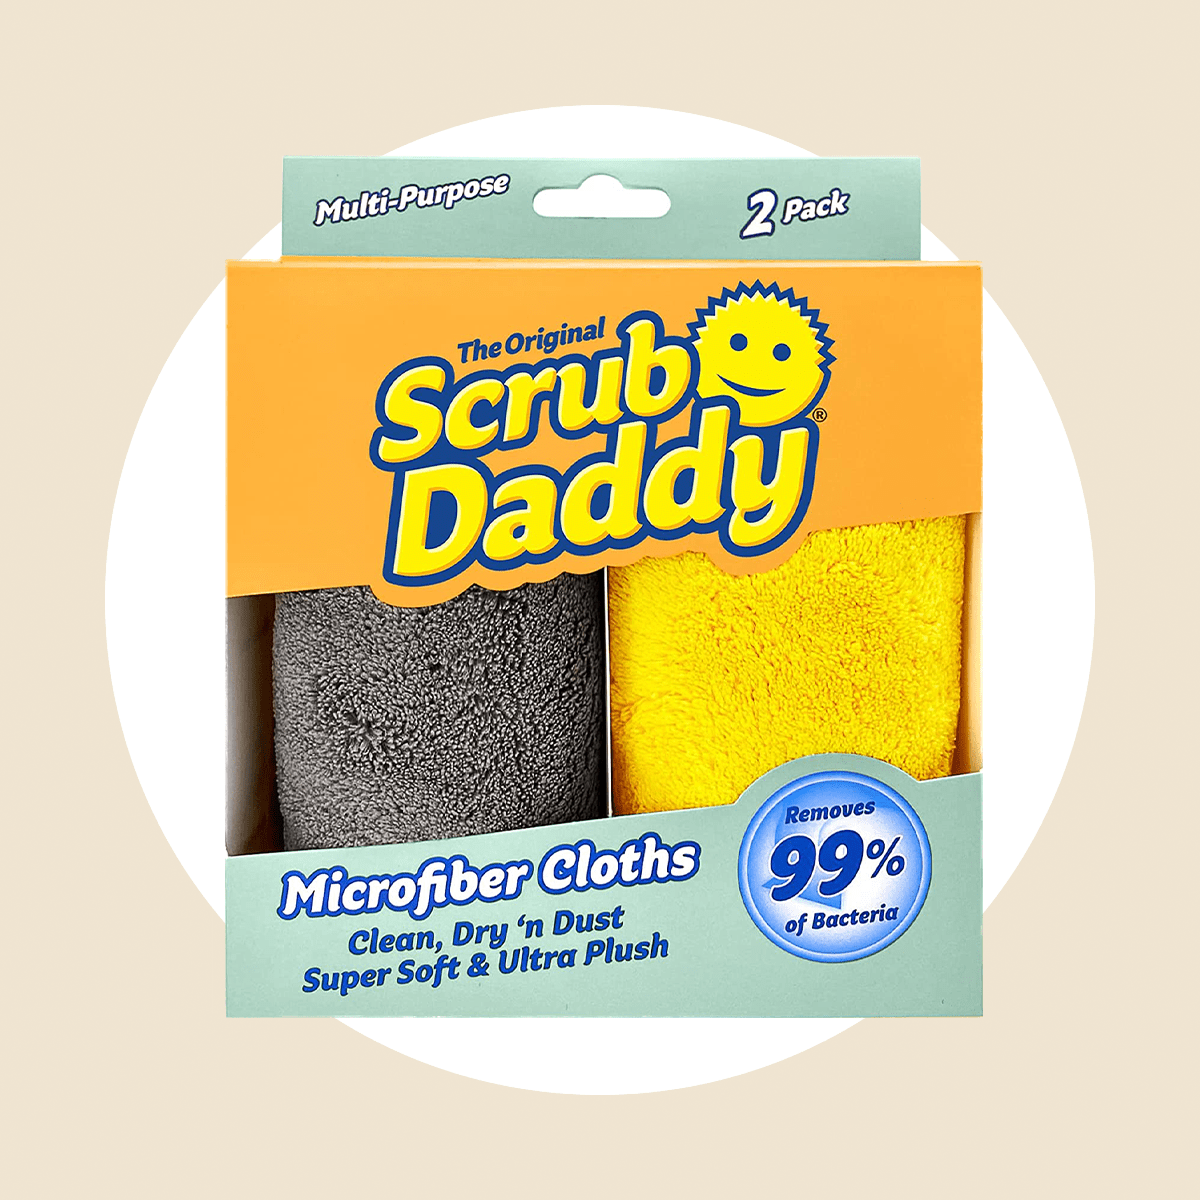 Scrub Daddy Microfiber Cloths Ecomm Via Amazon.com